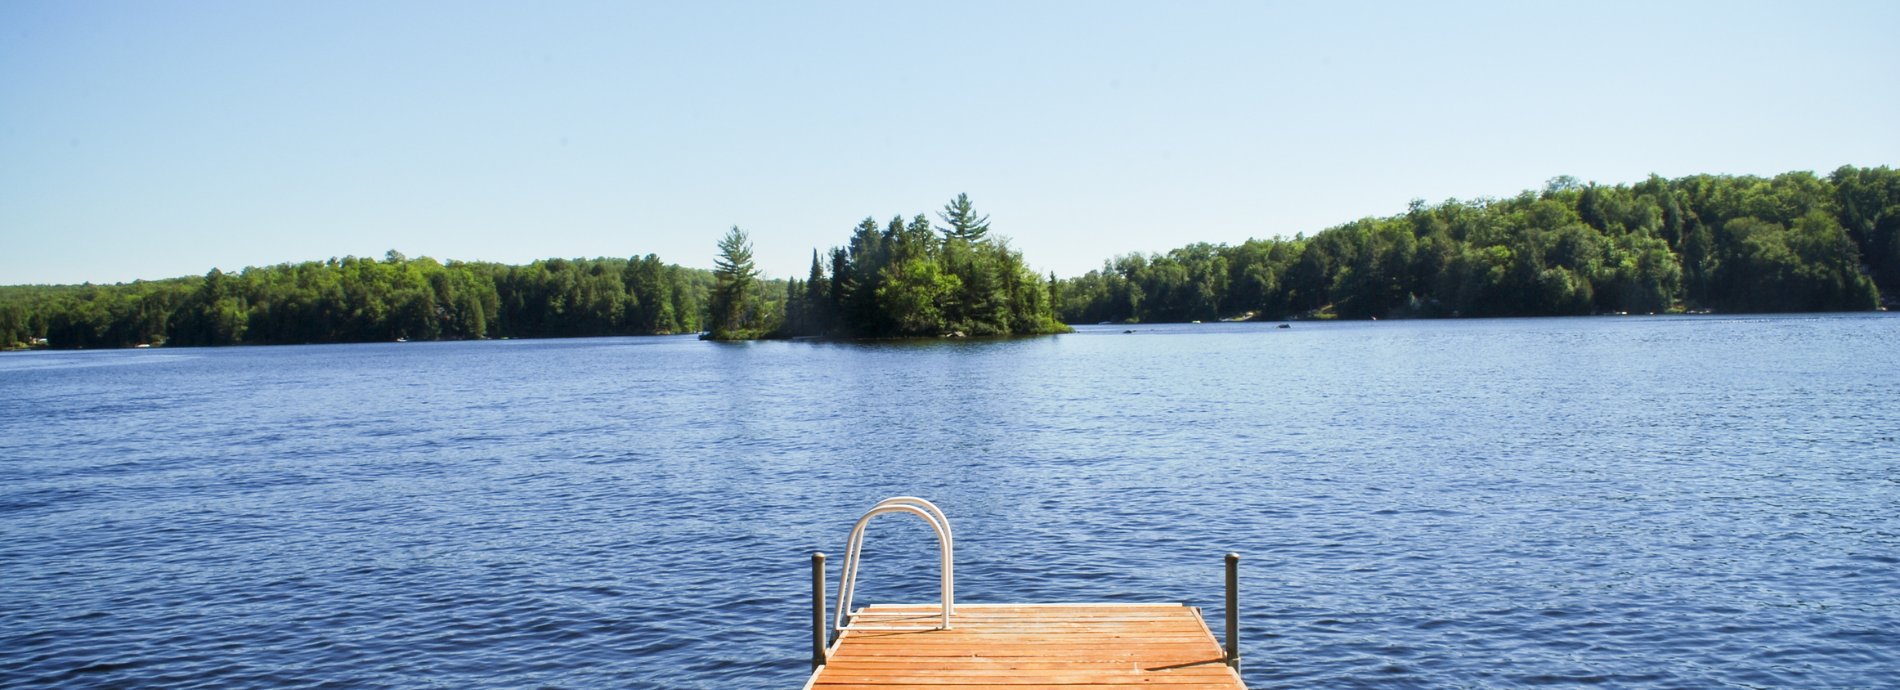 dock on a calm lake